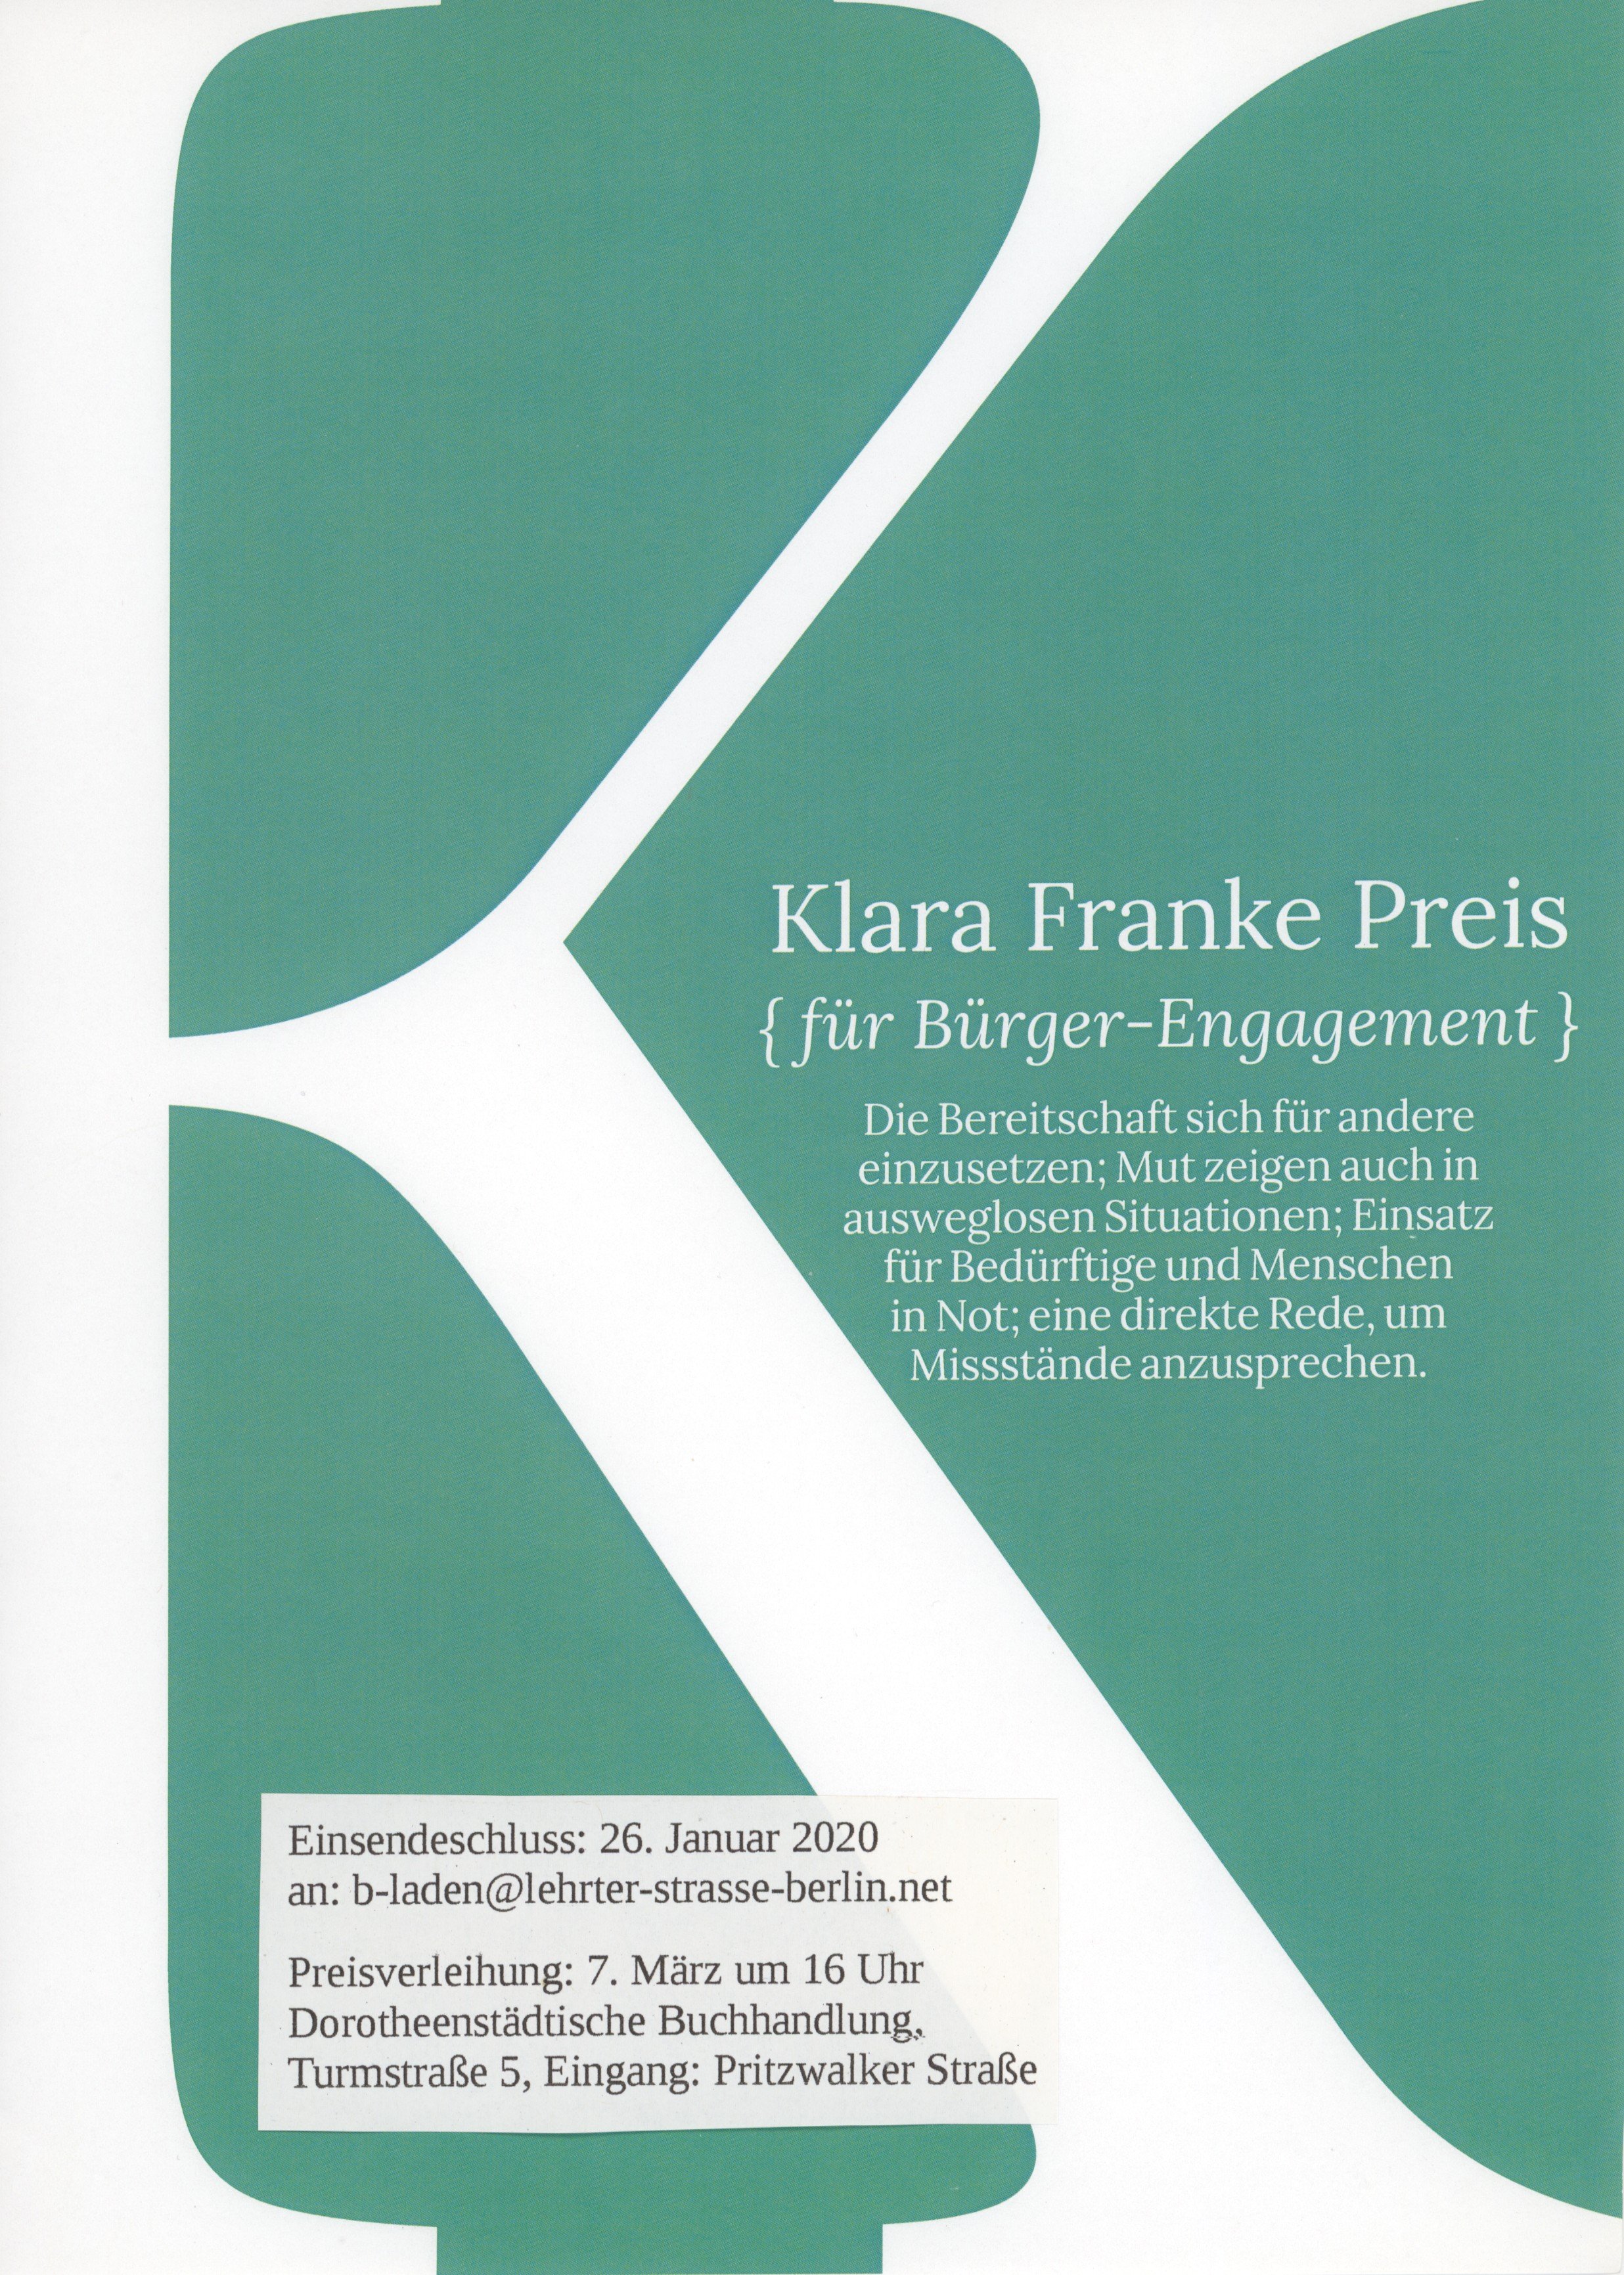 Flyer zum Klara-Franke-Preis (B-Laden CC BY-NC-SA)